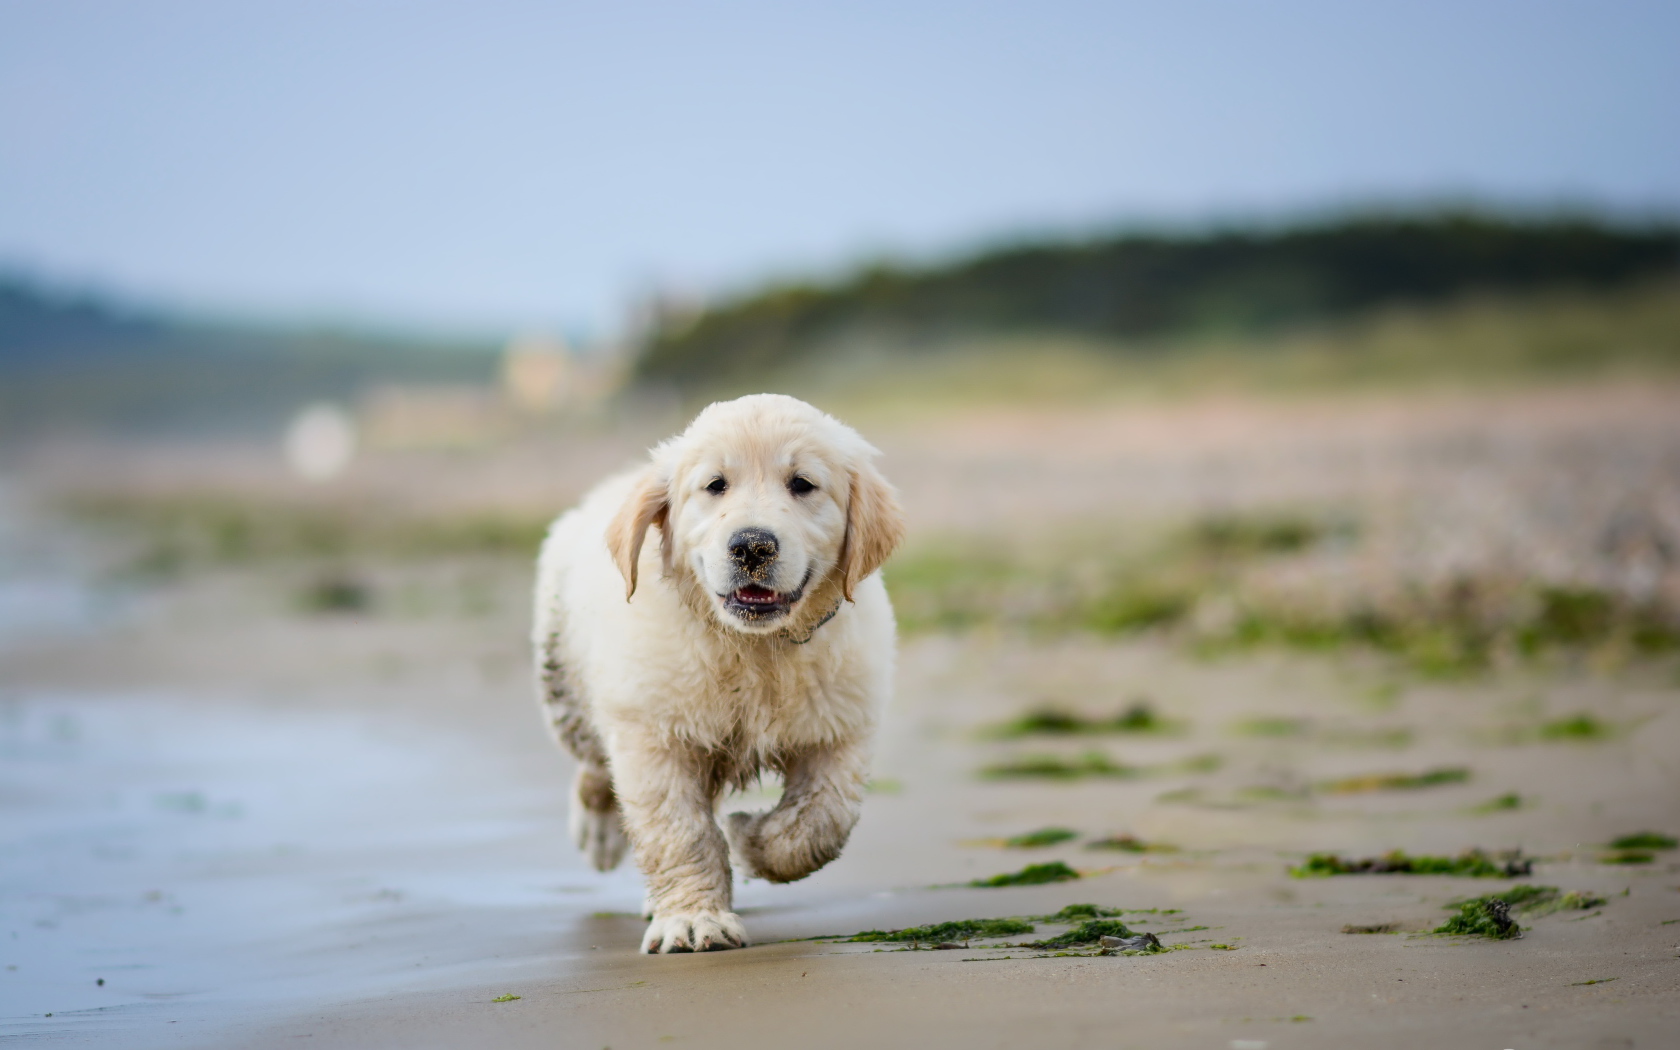 A small puppy of a golden retriever runs through the wet sand